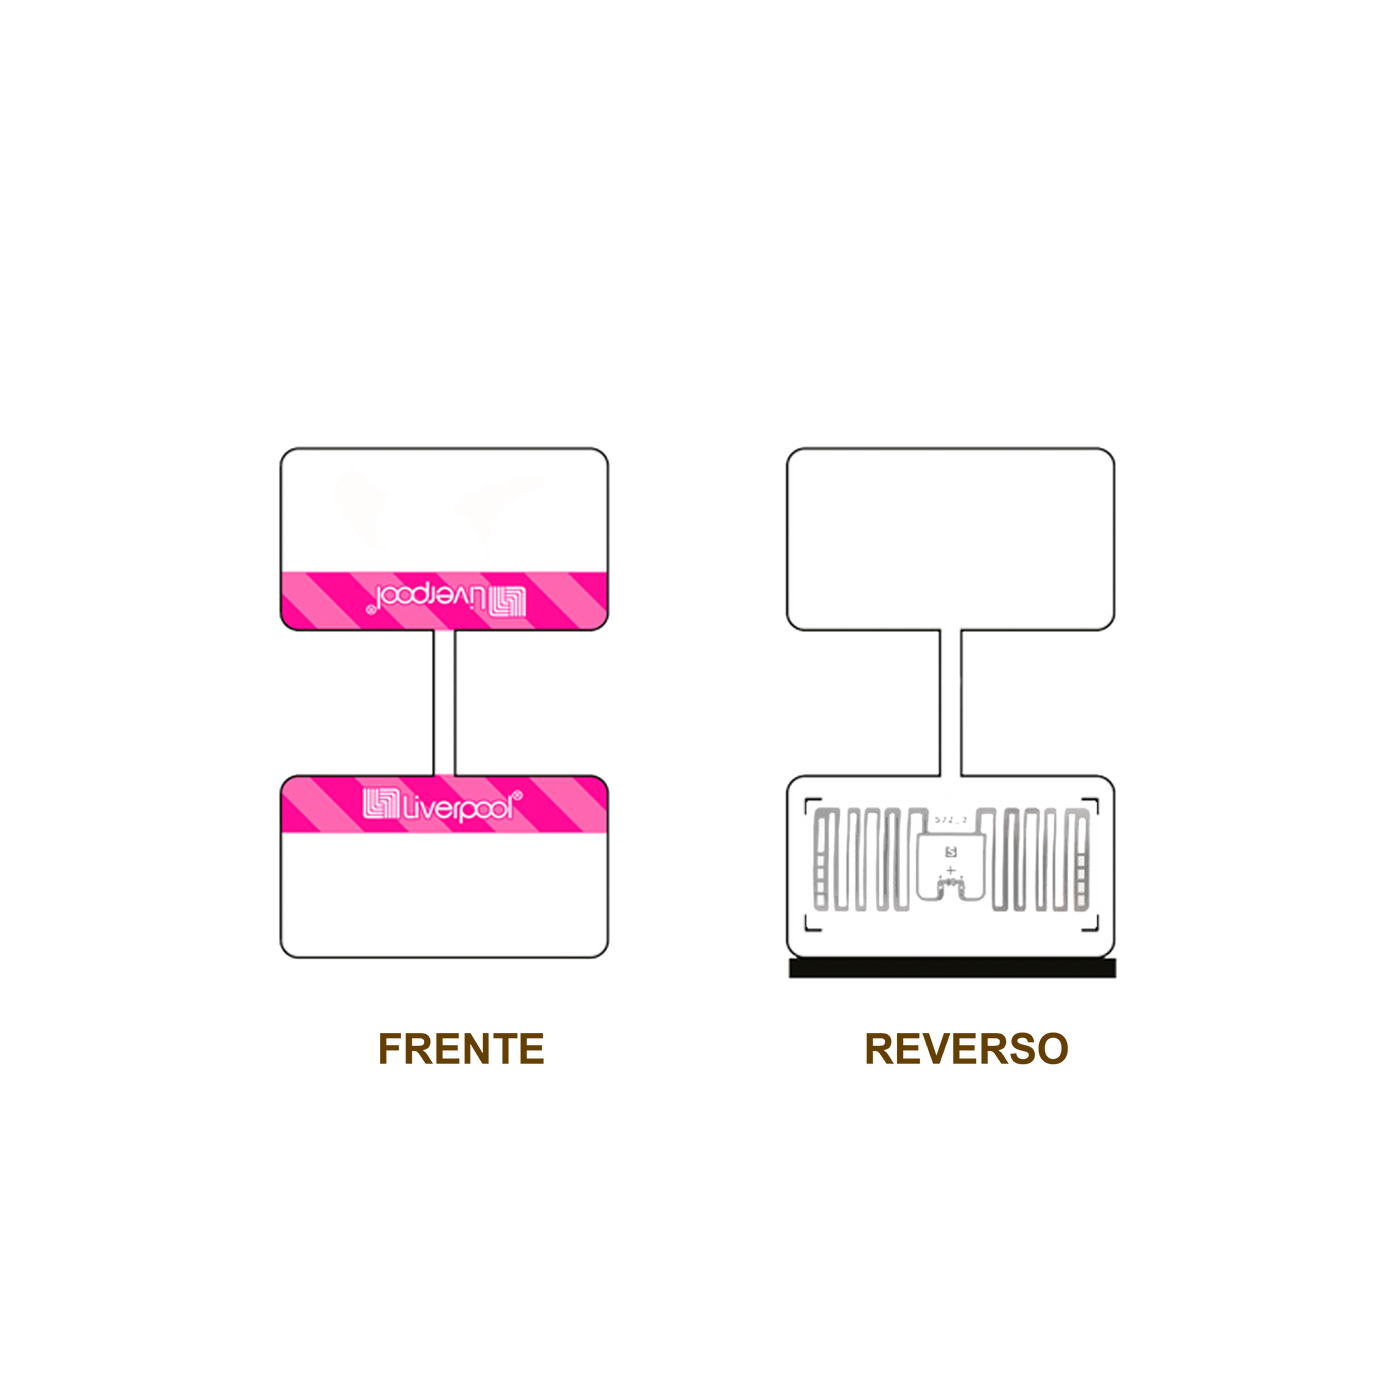 20 Millares de Etiqueta RFID  BOPP blanca con impresión rosa, 45mm x 70 mm con inlay Miniweb M730 de Avery Dennison, Clase 1 Gen 2, UHF 860-960 Mhz, EPC 128 Bit